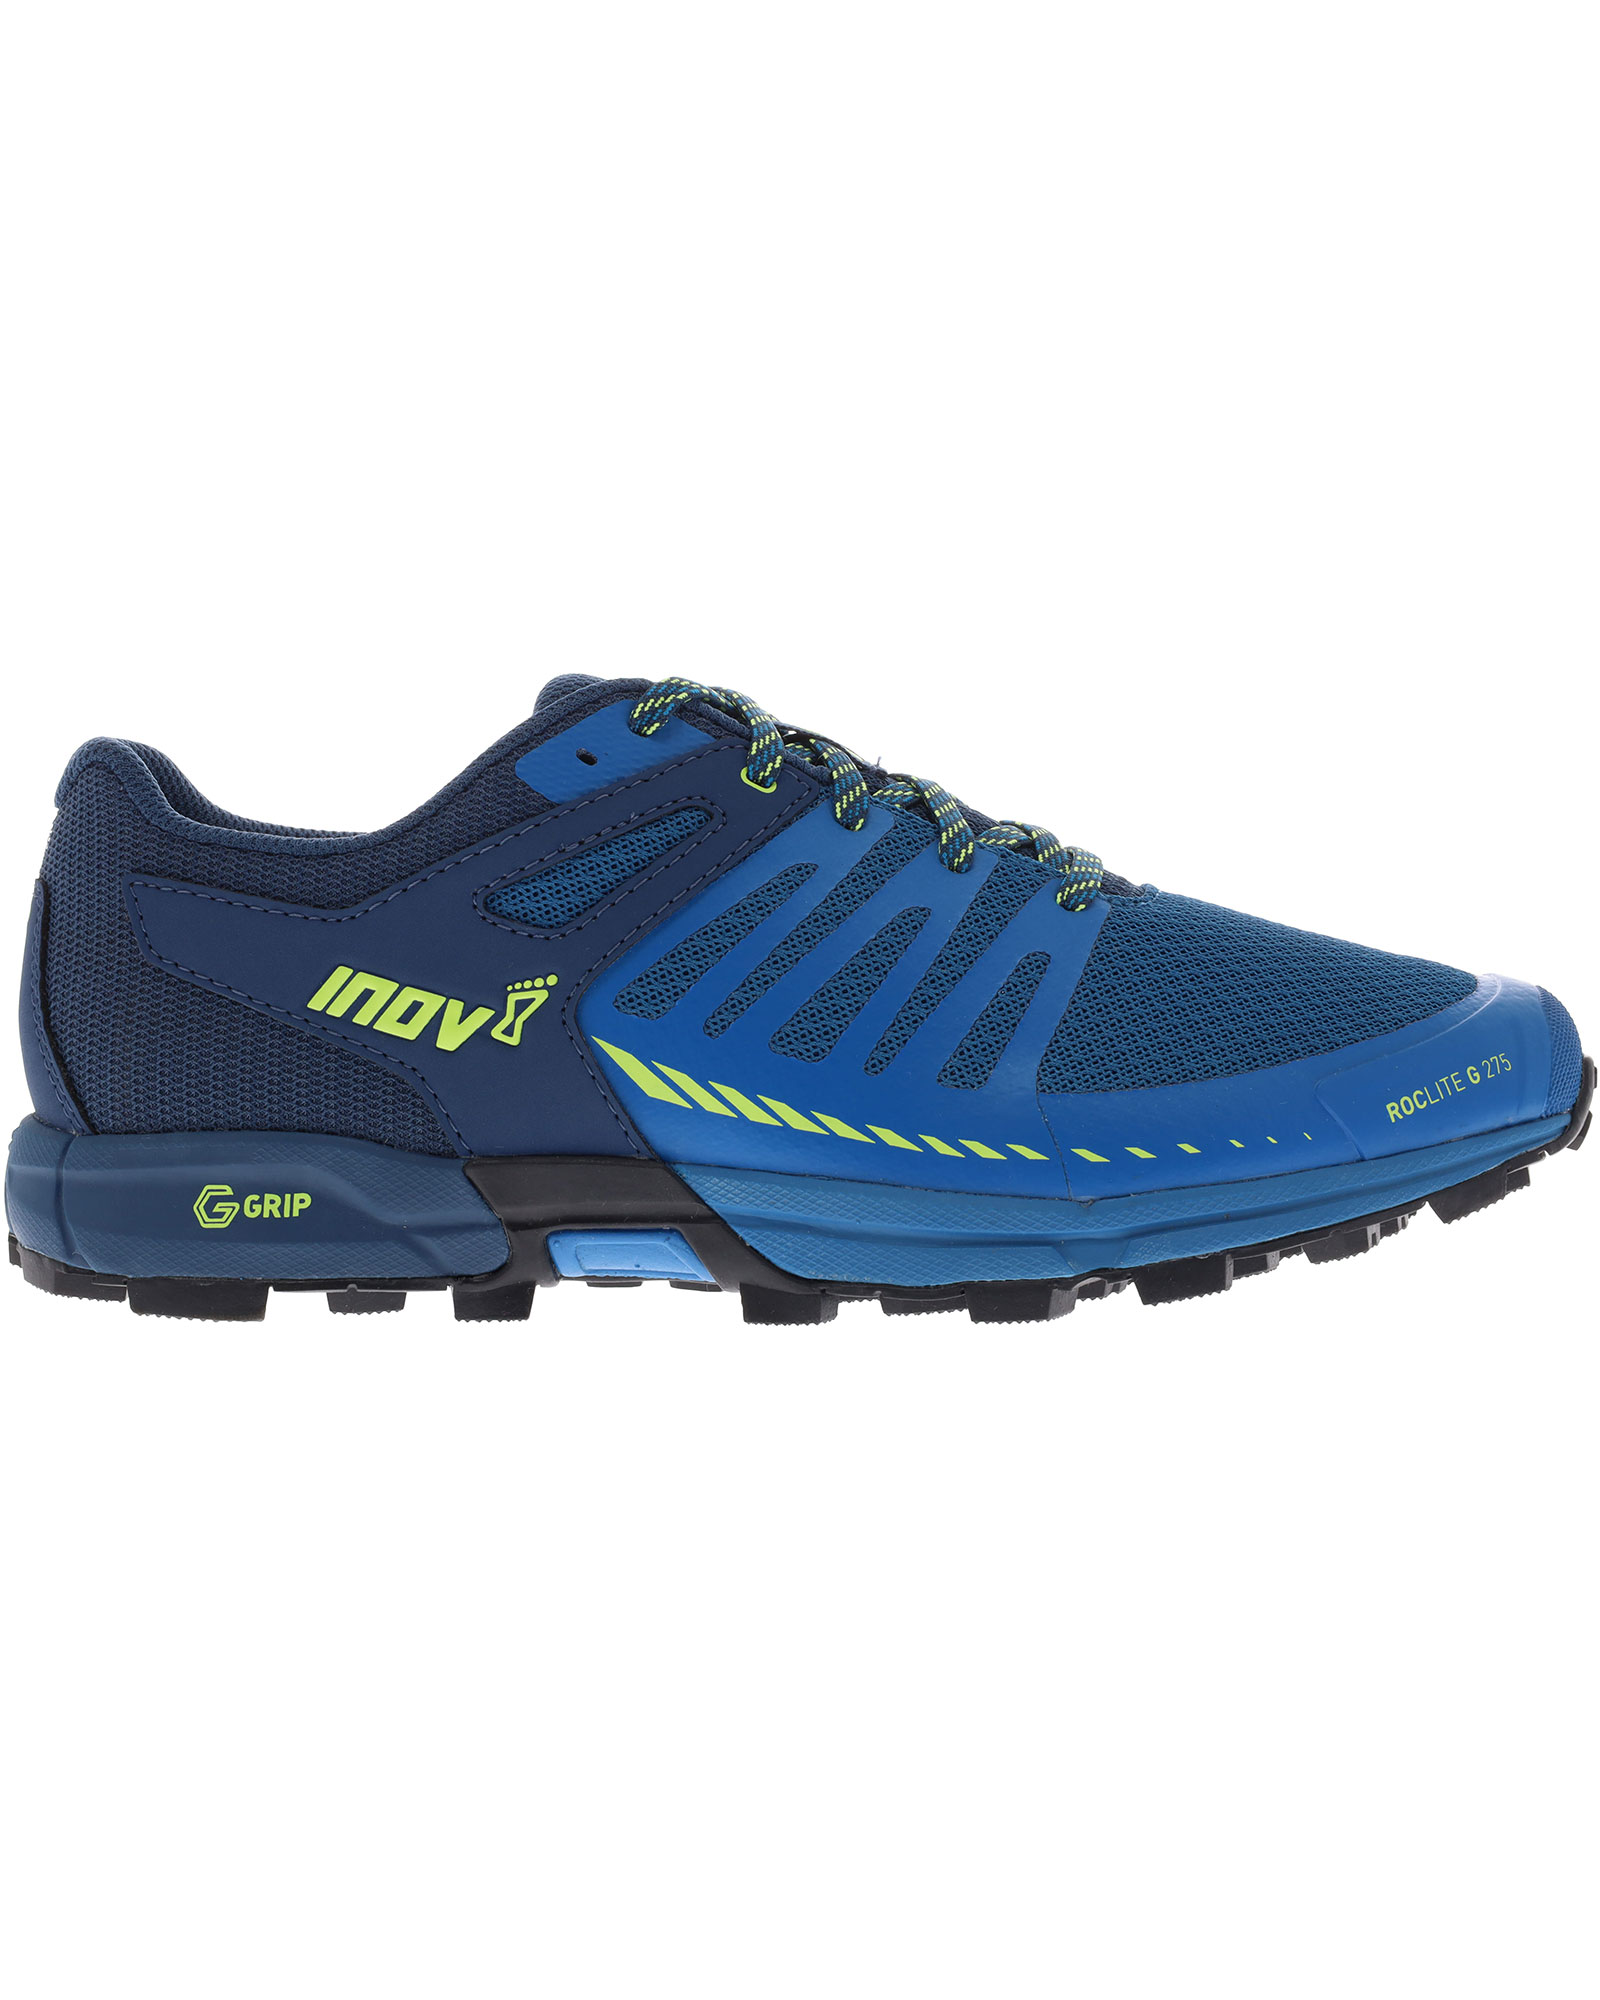 Inov 8 Roclite G 275 V2 Men’s Trail Shoes - Blue/Navy/Lime UK 11.5